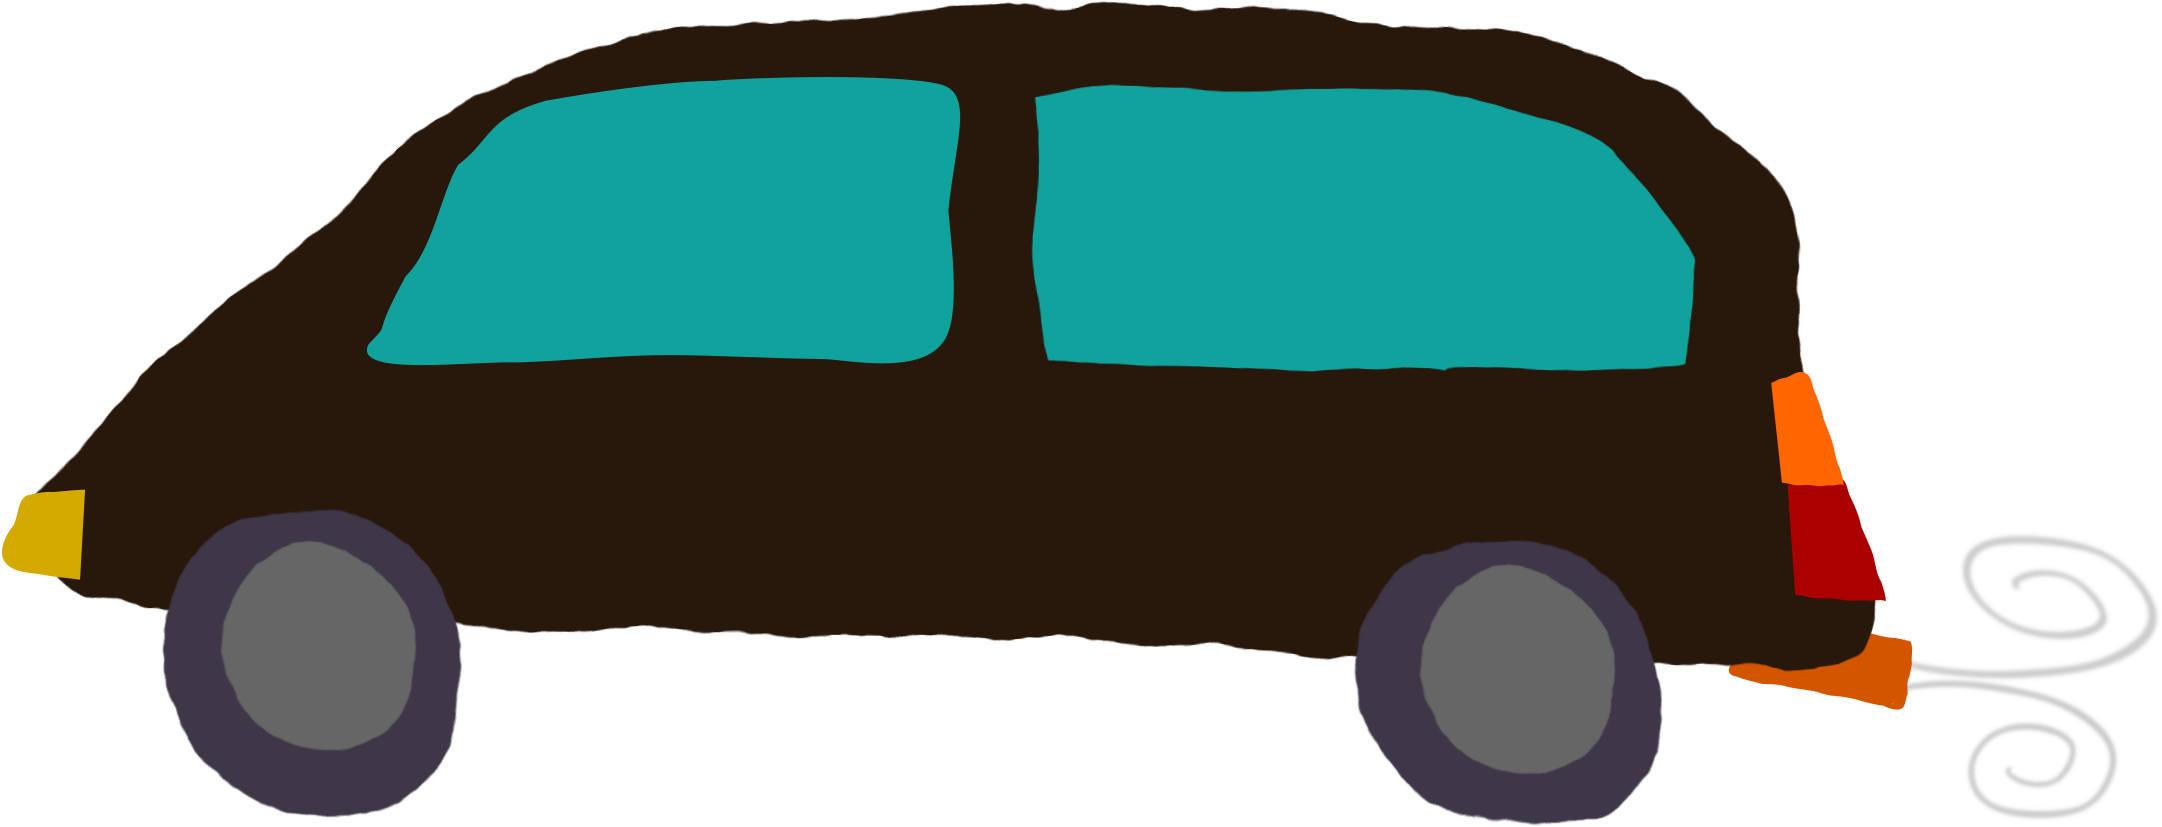 Big Image - Compact Van (2400x1697)